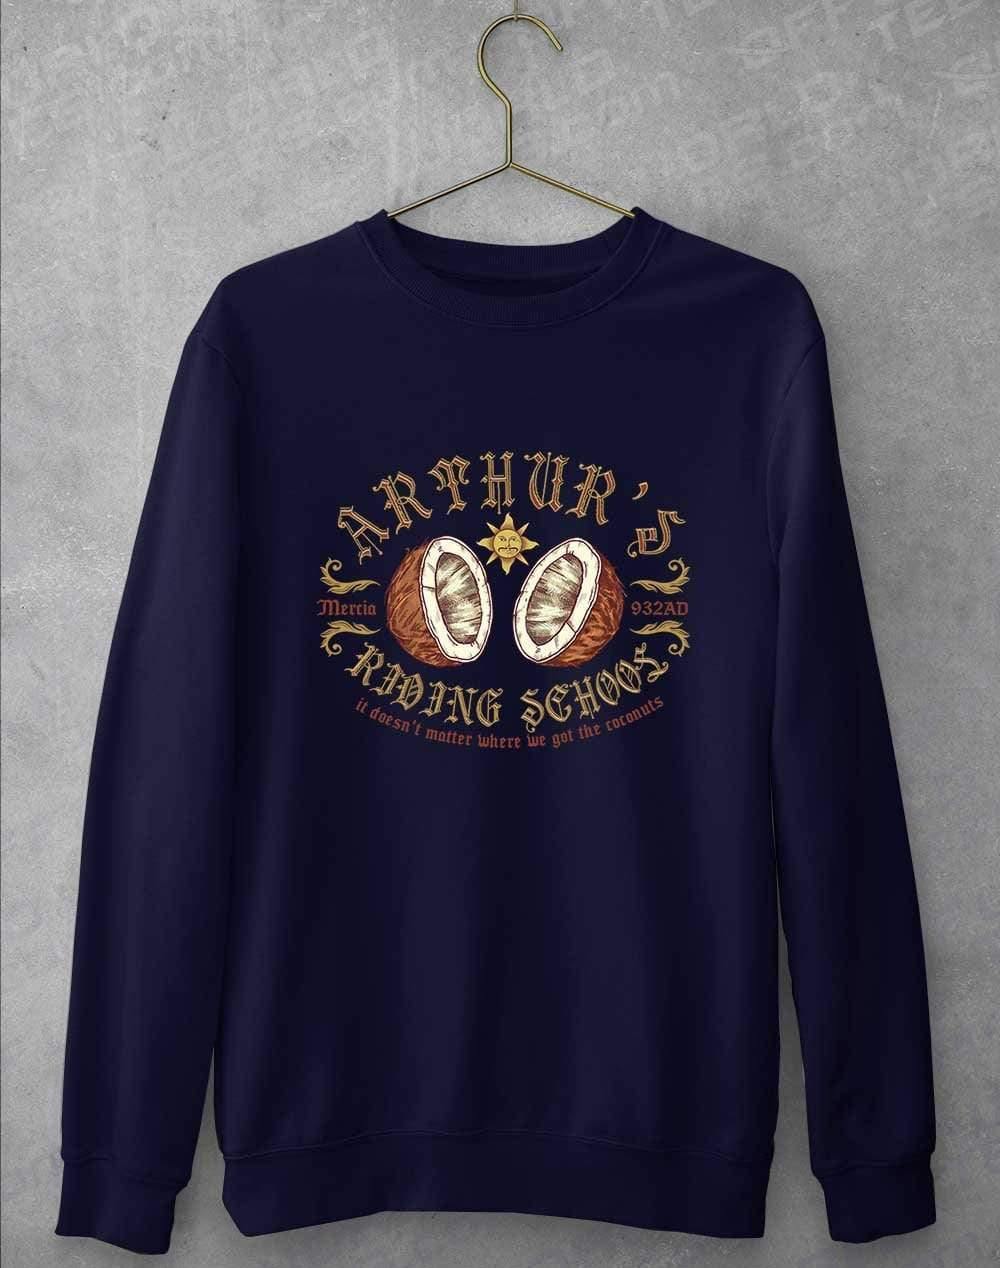 King Arthur's Riding School Sweatshirt S / Oxford Navy  - Off World Tees